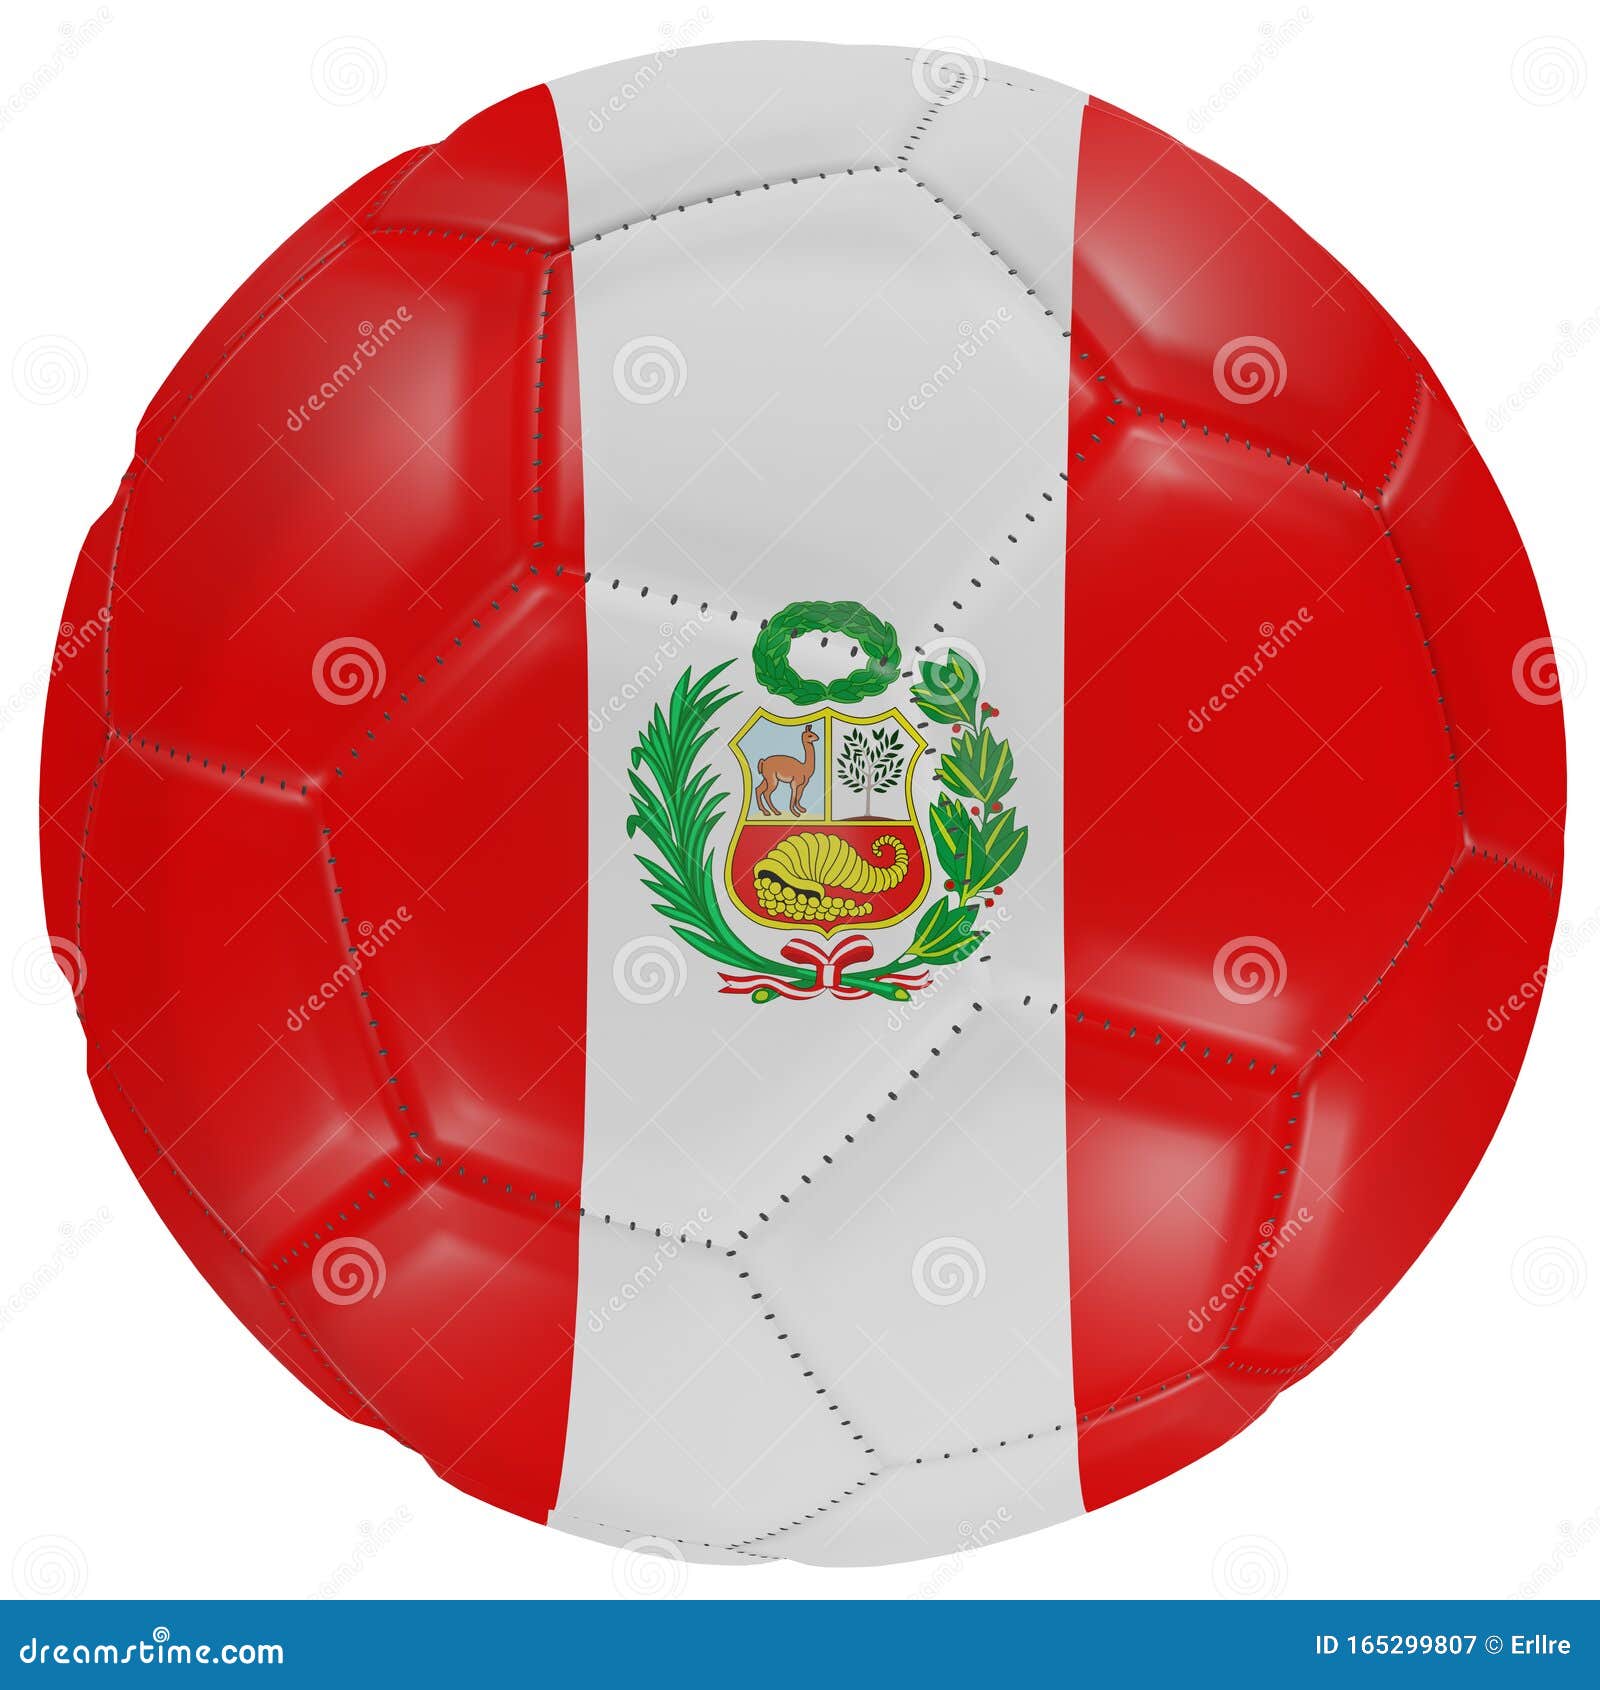 Peru flag on a soccer ball stock illustration. Illustration of flag ...